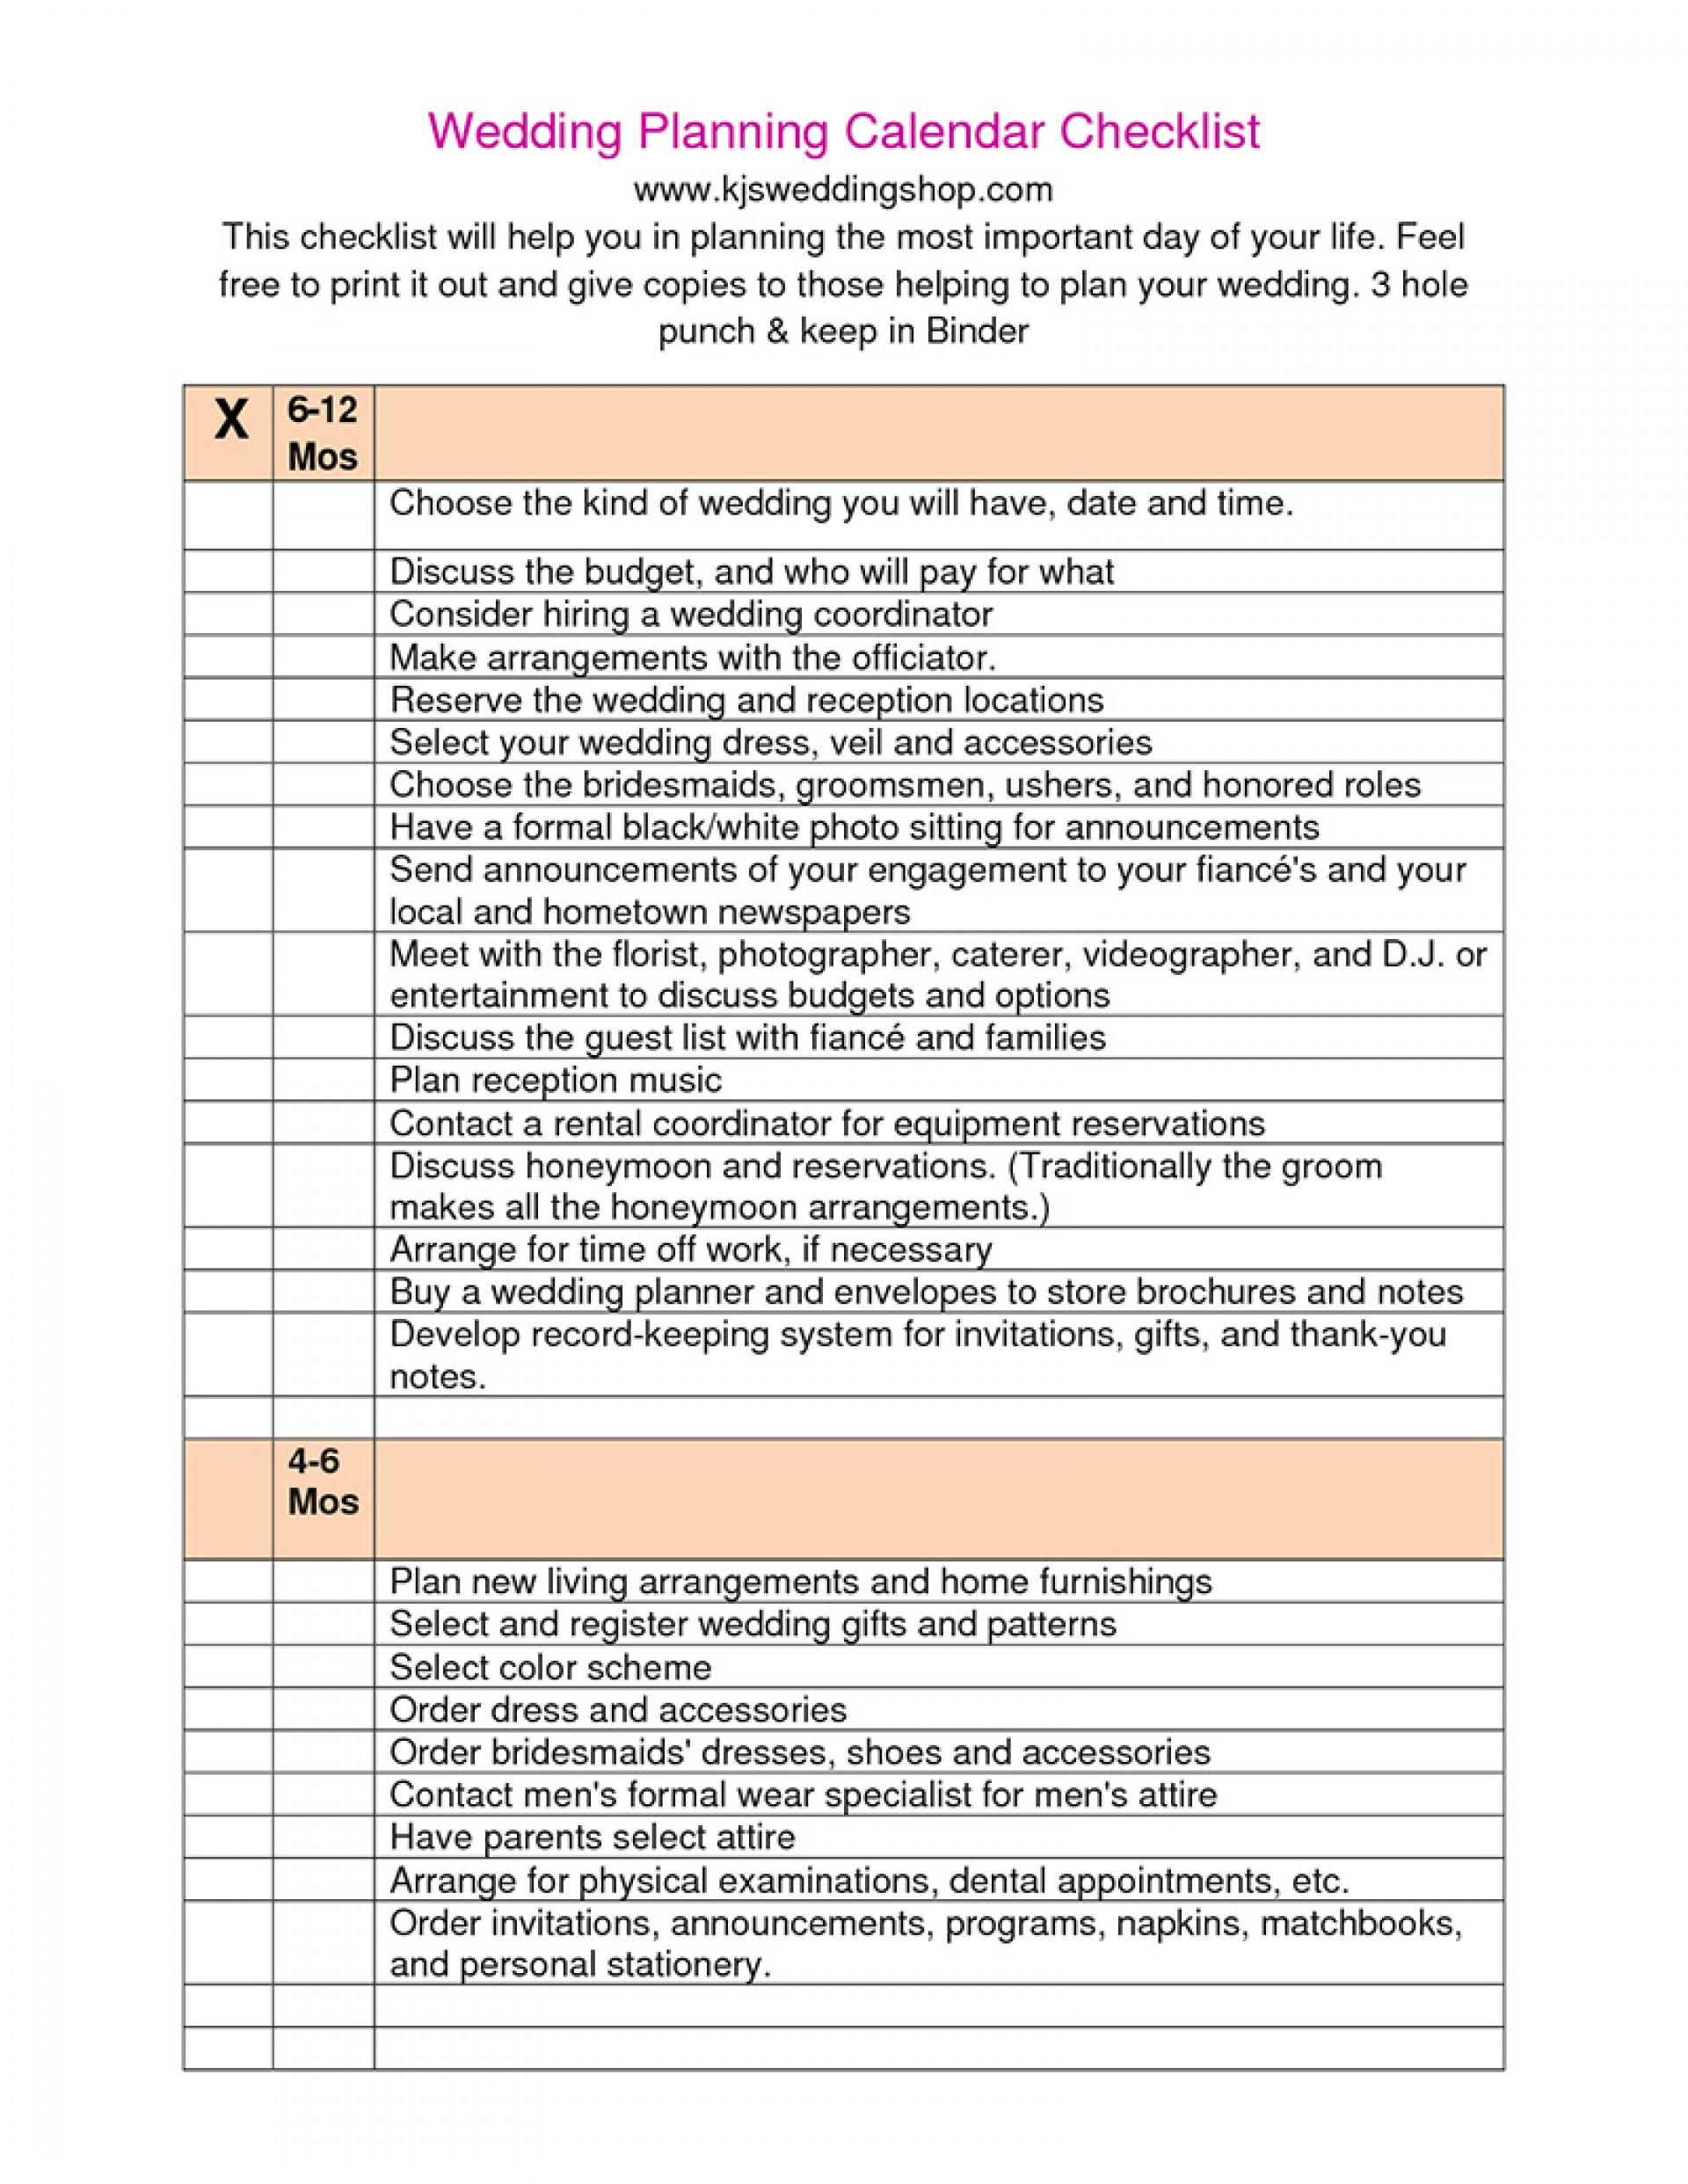 wedding-planning-checklist-excel-spreadsheet-inside-015-template-ideas